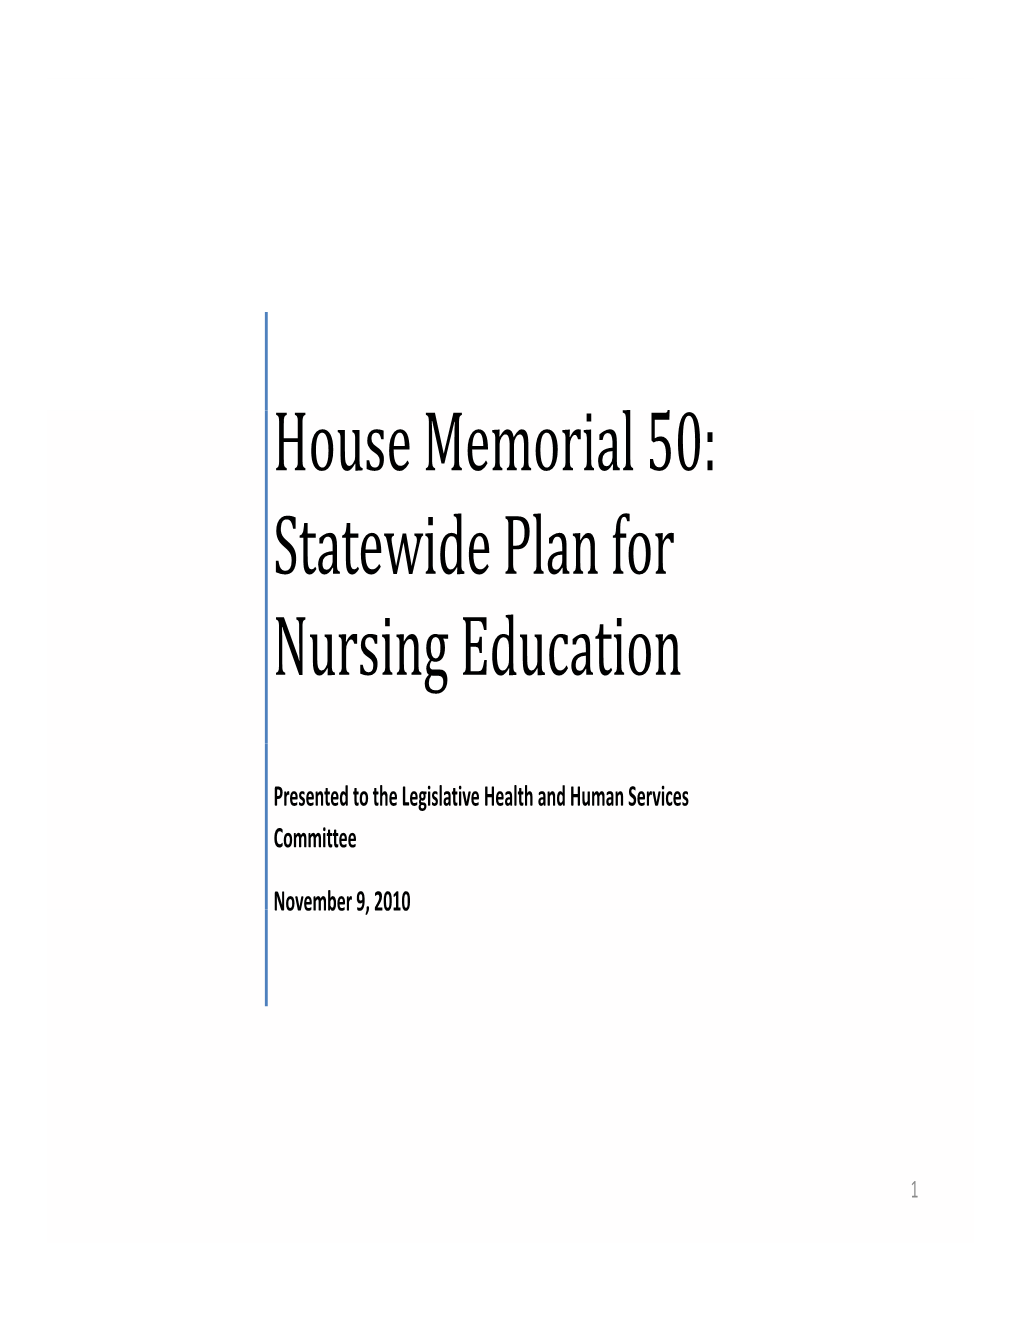 L 5 House Memorial 50: Statewide Plan for Nursing Education